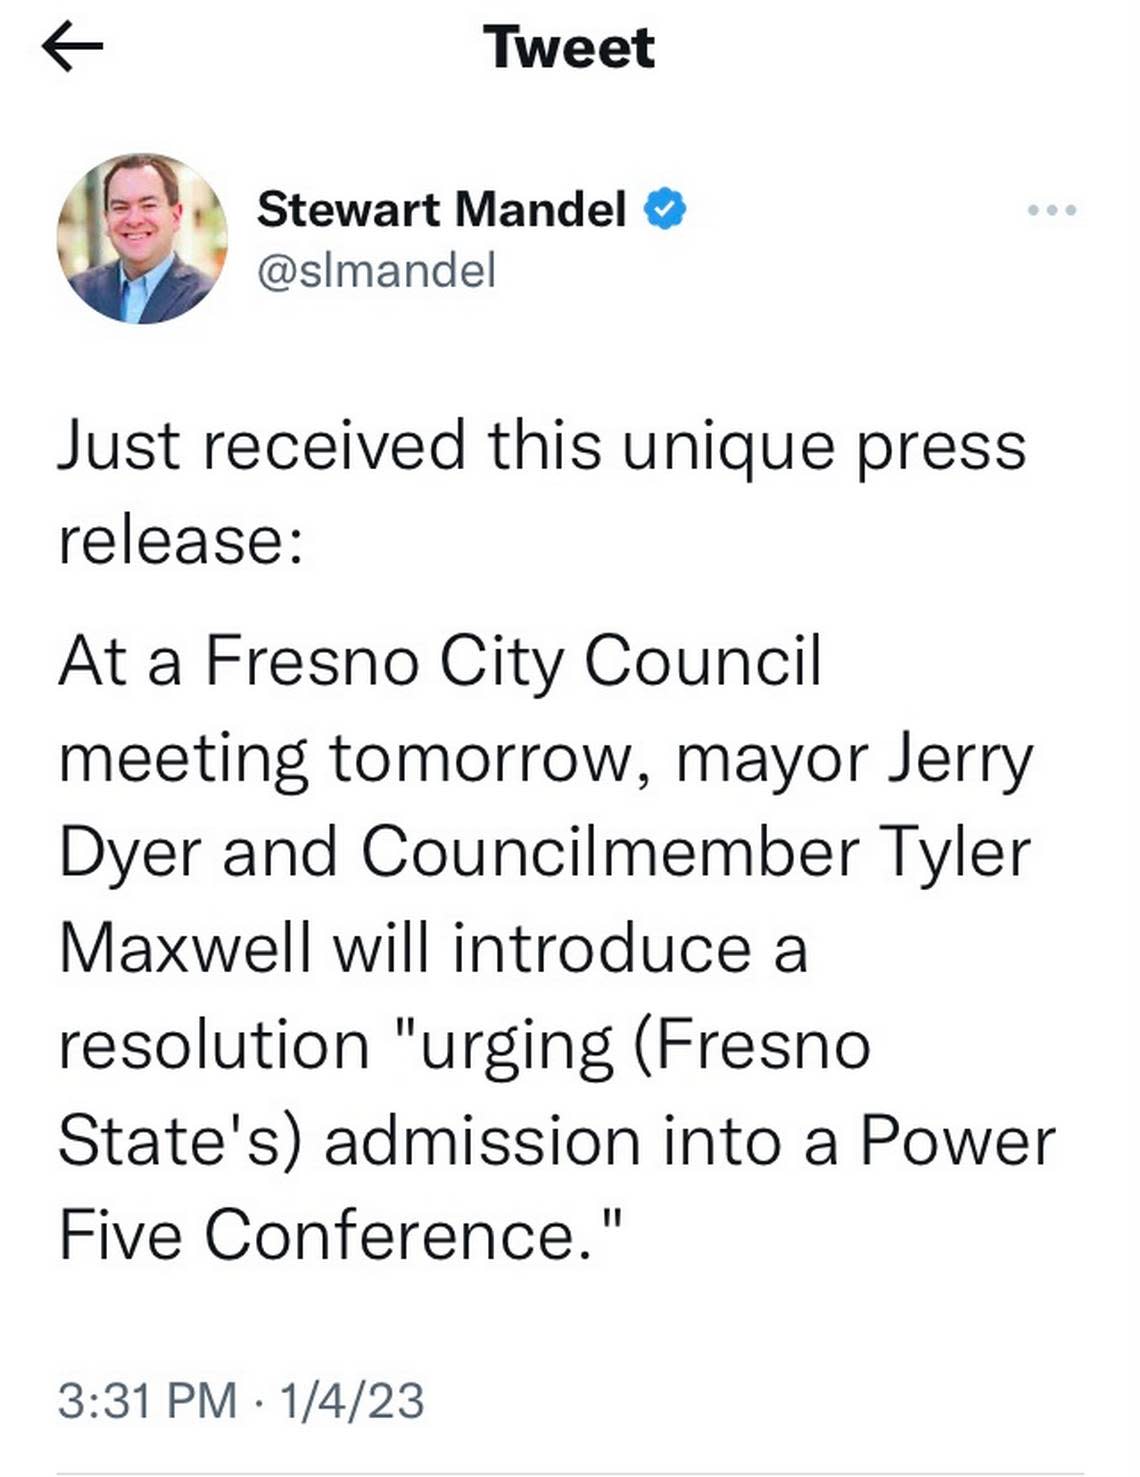 Stewart Mandel tweet on Fresno State